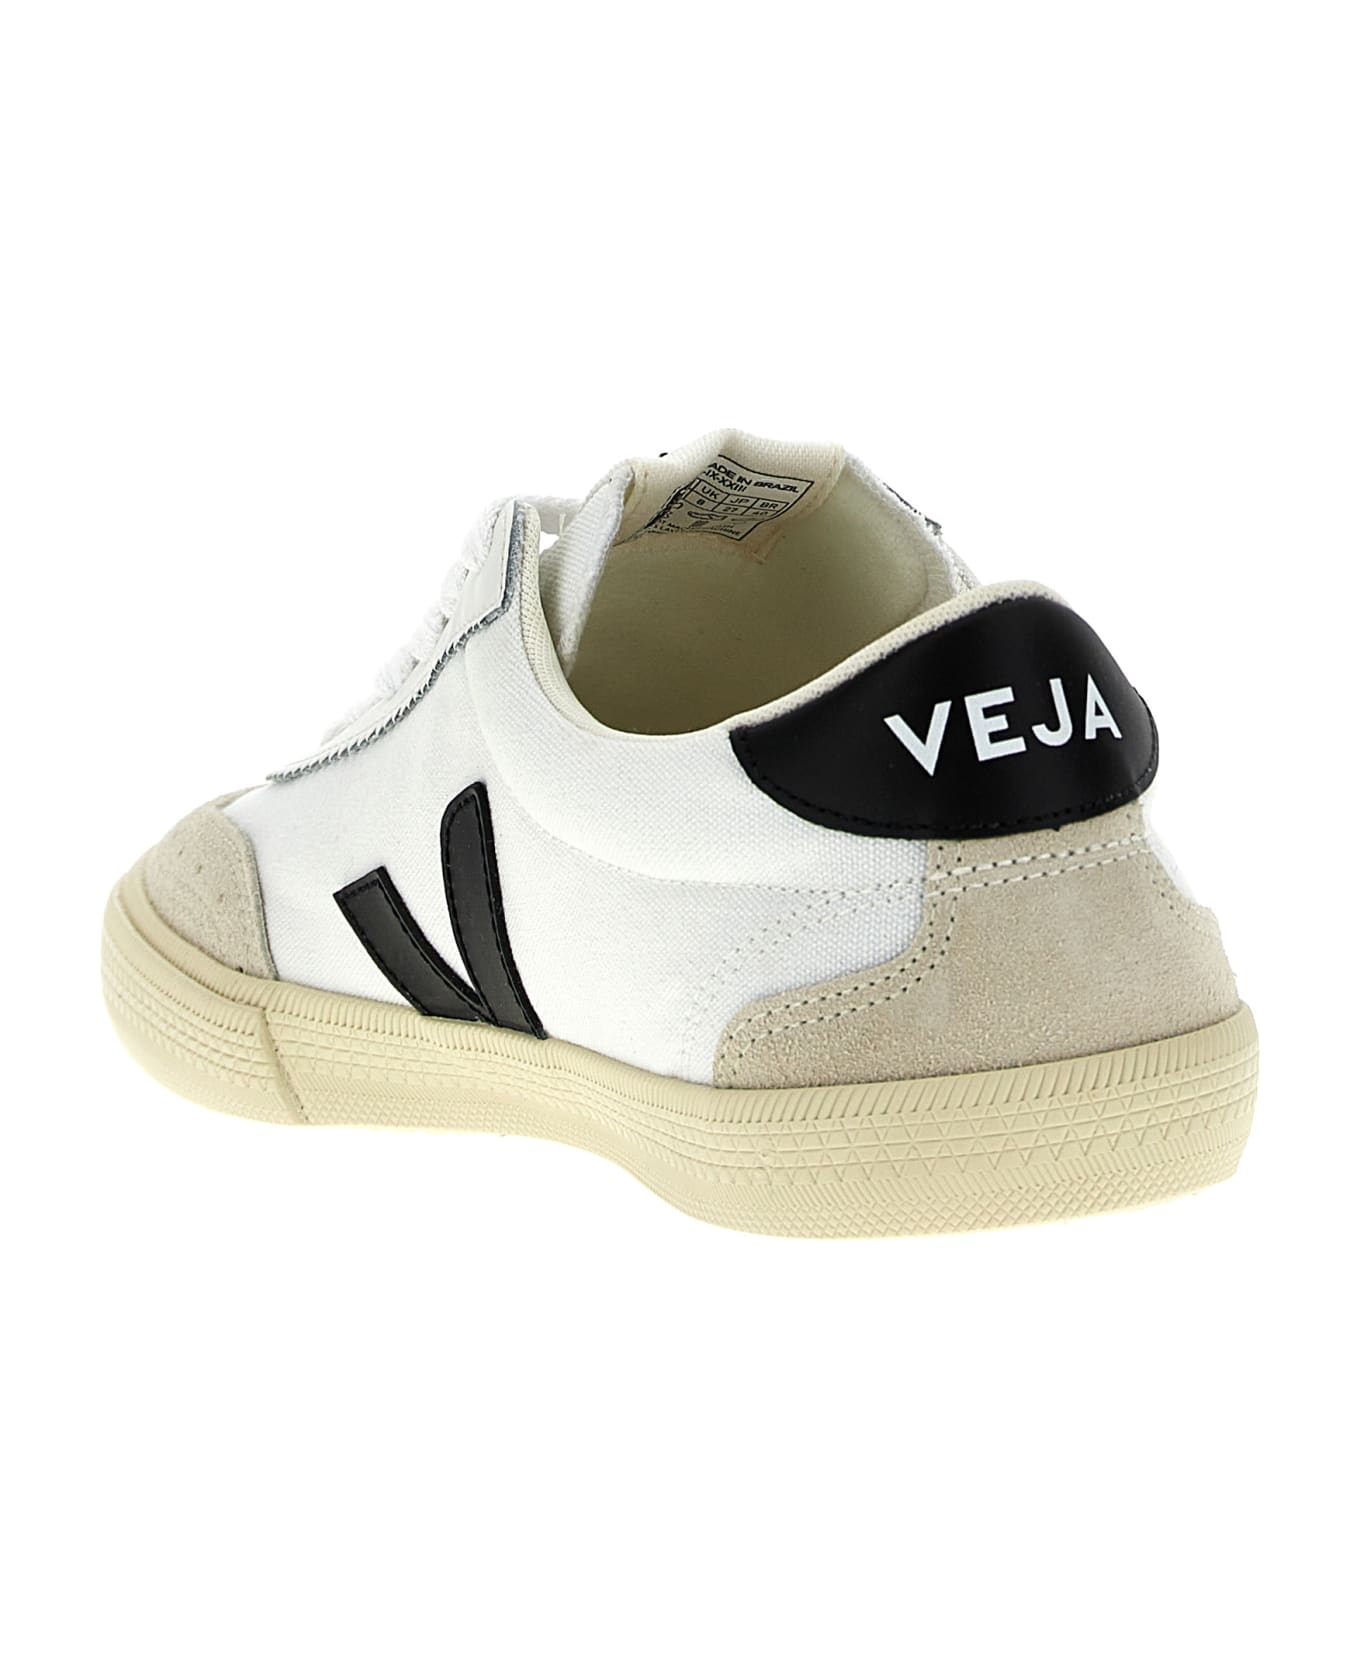 Veja 'volley' Sneakers - White/Black